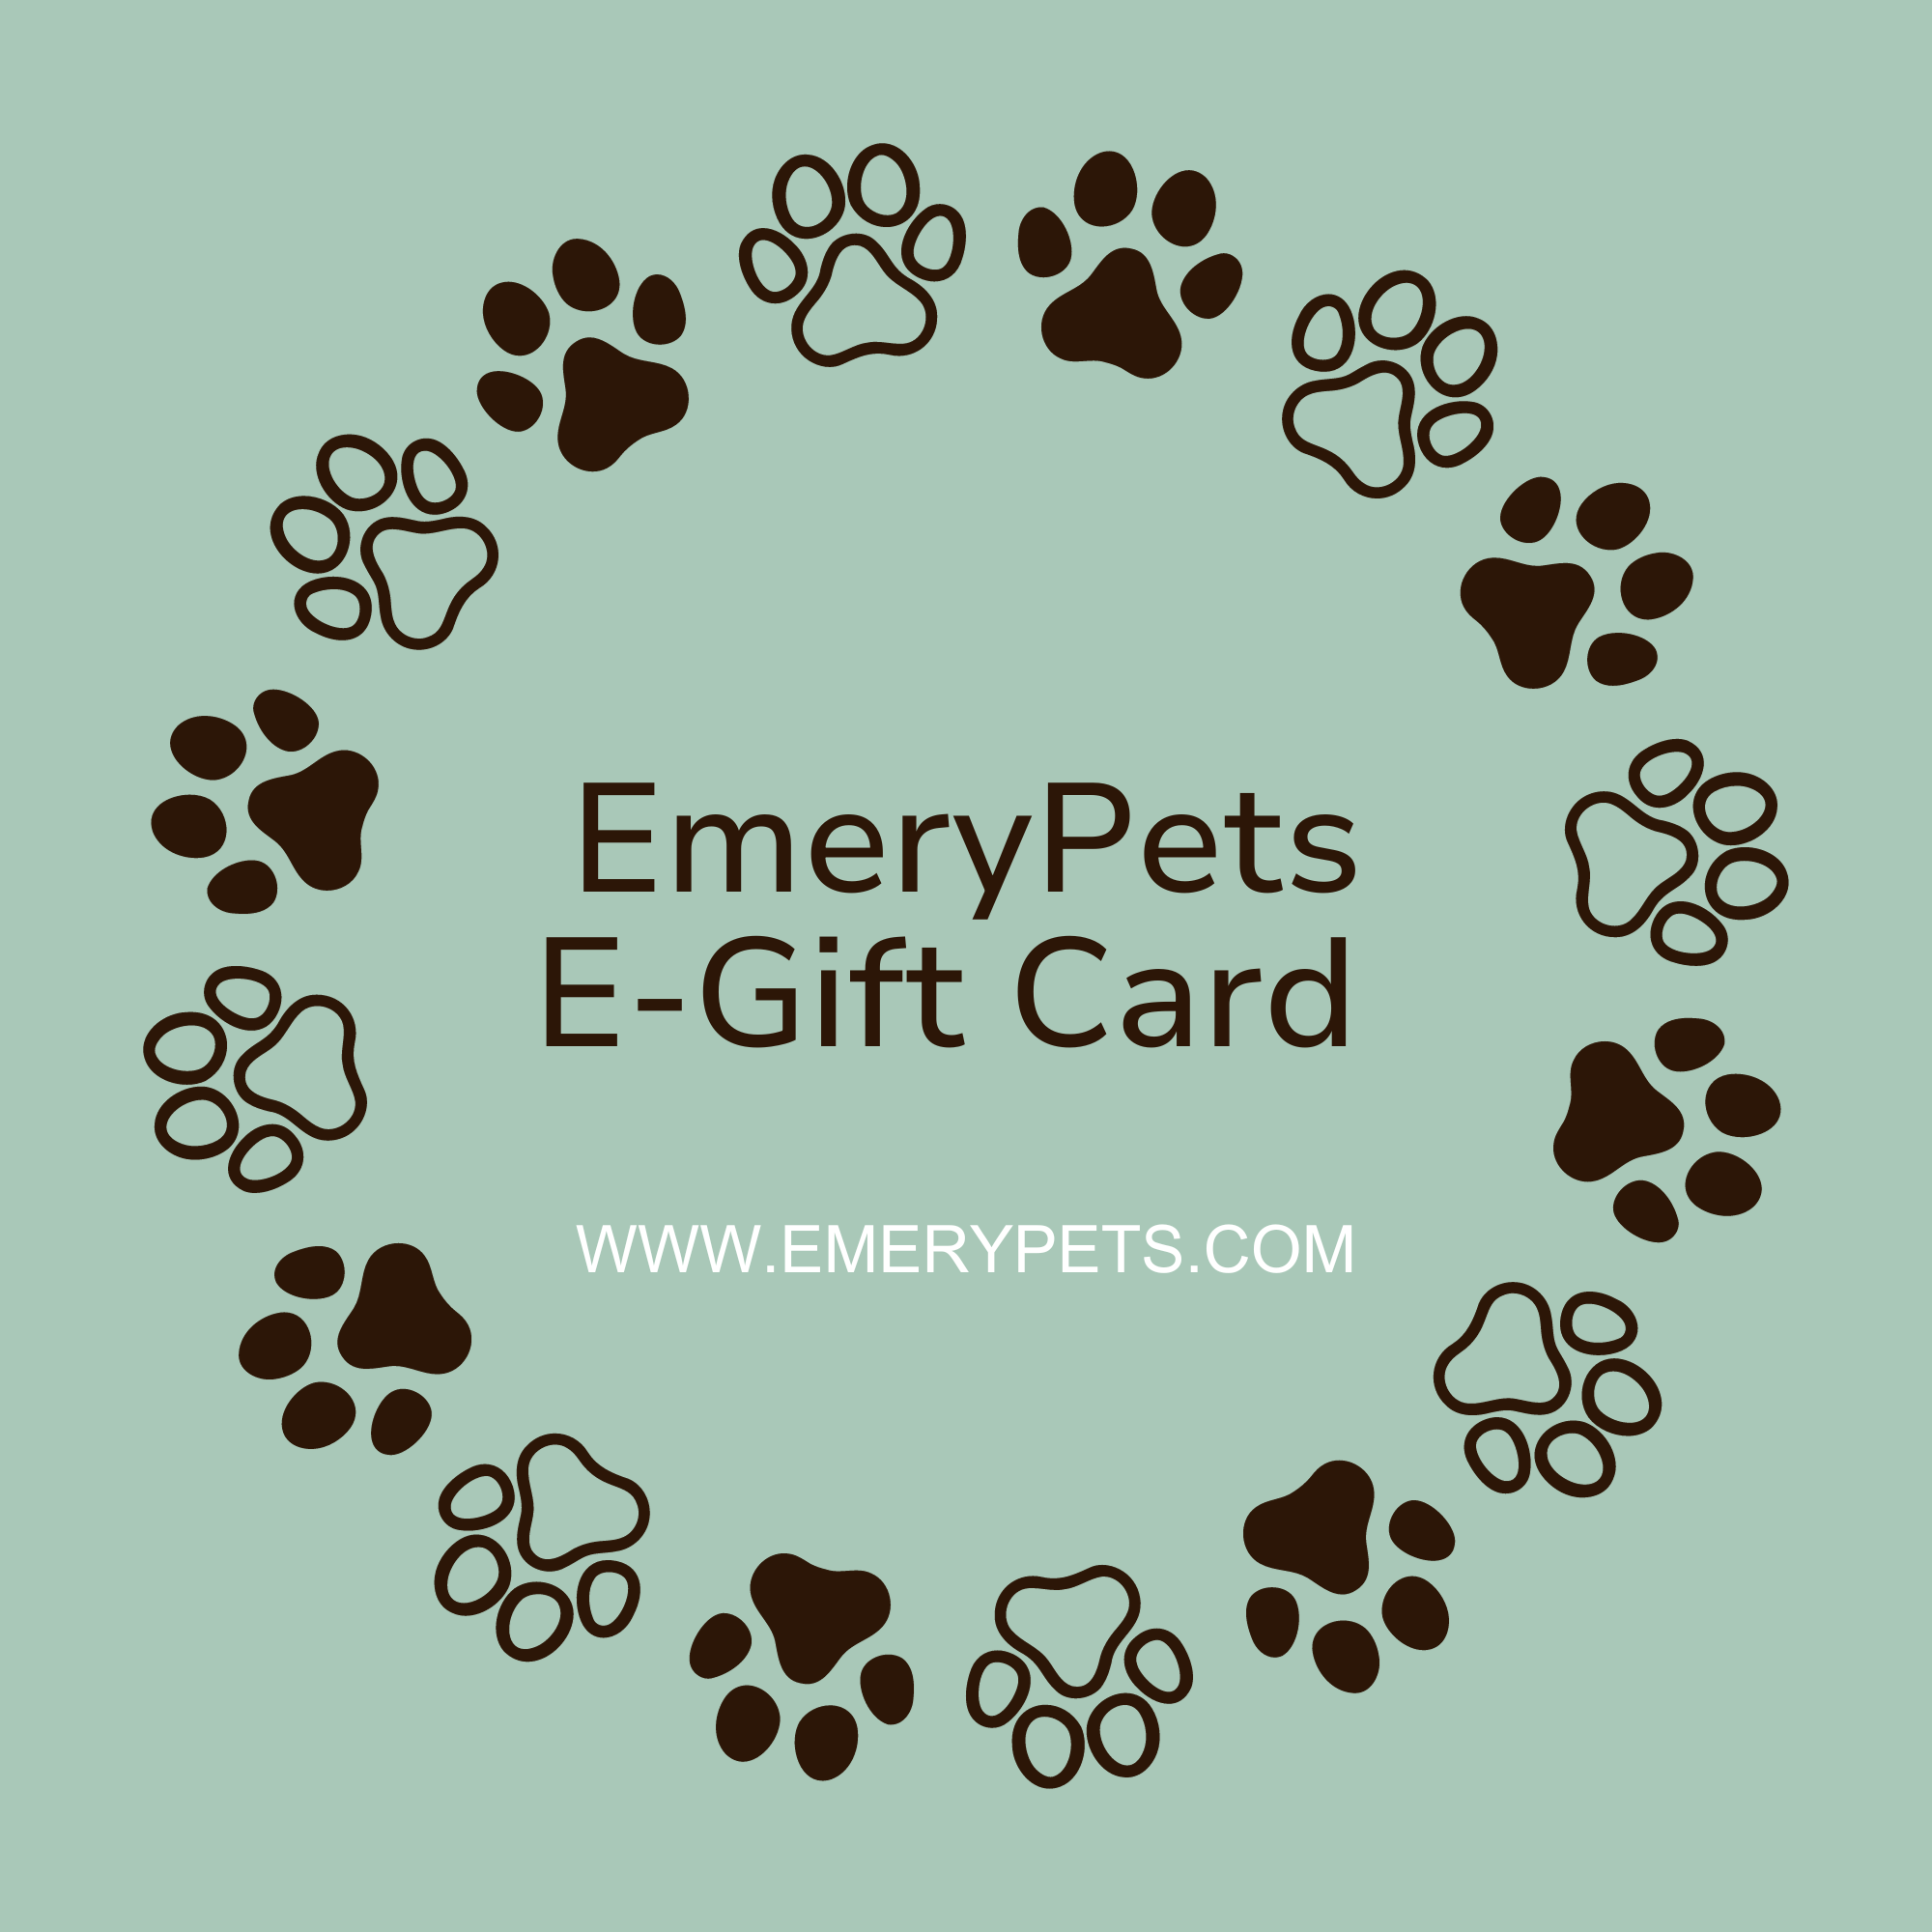 EmeryPets E-Gift Card